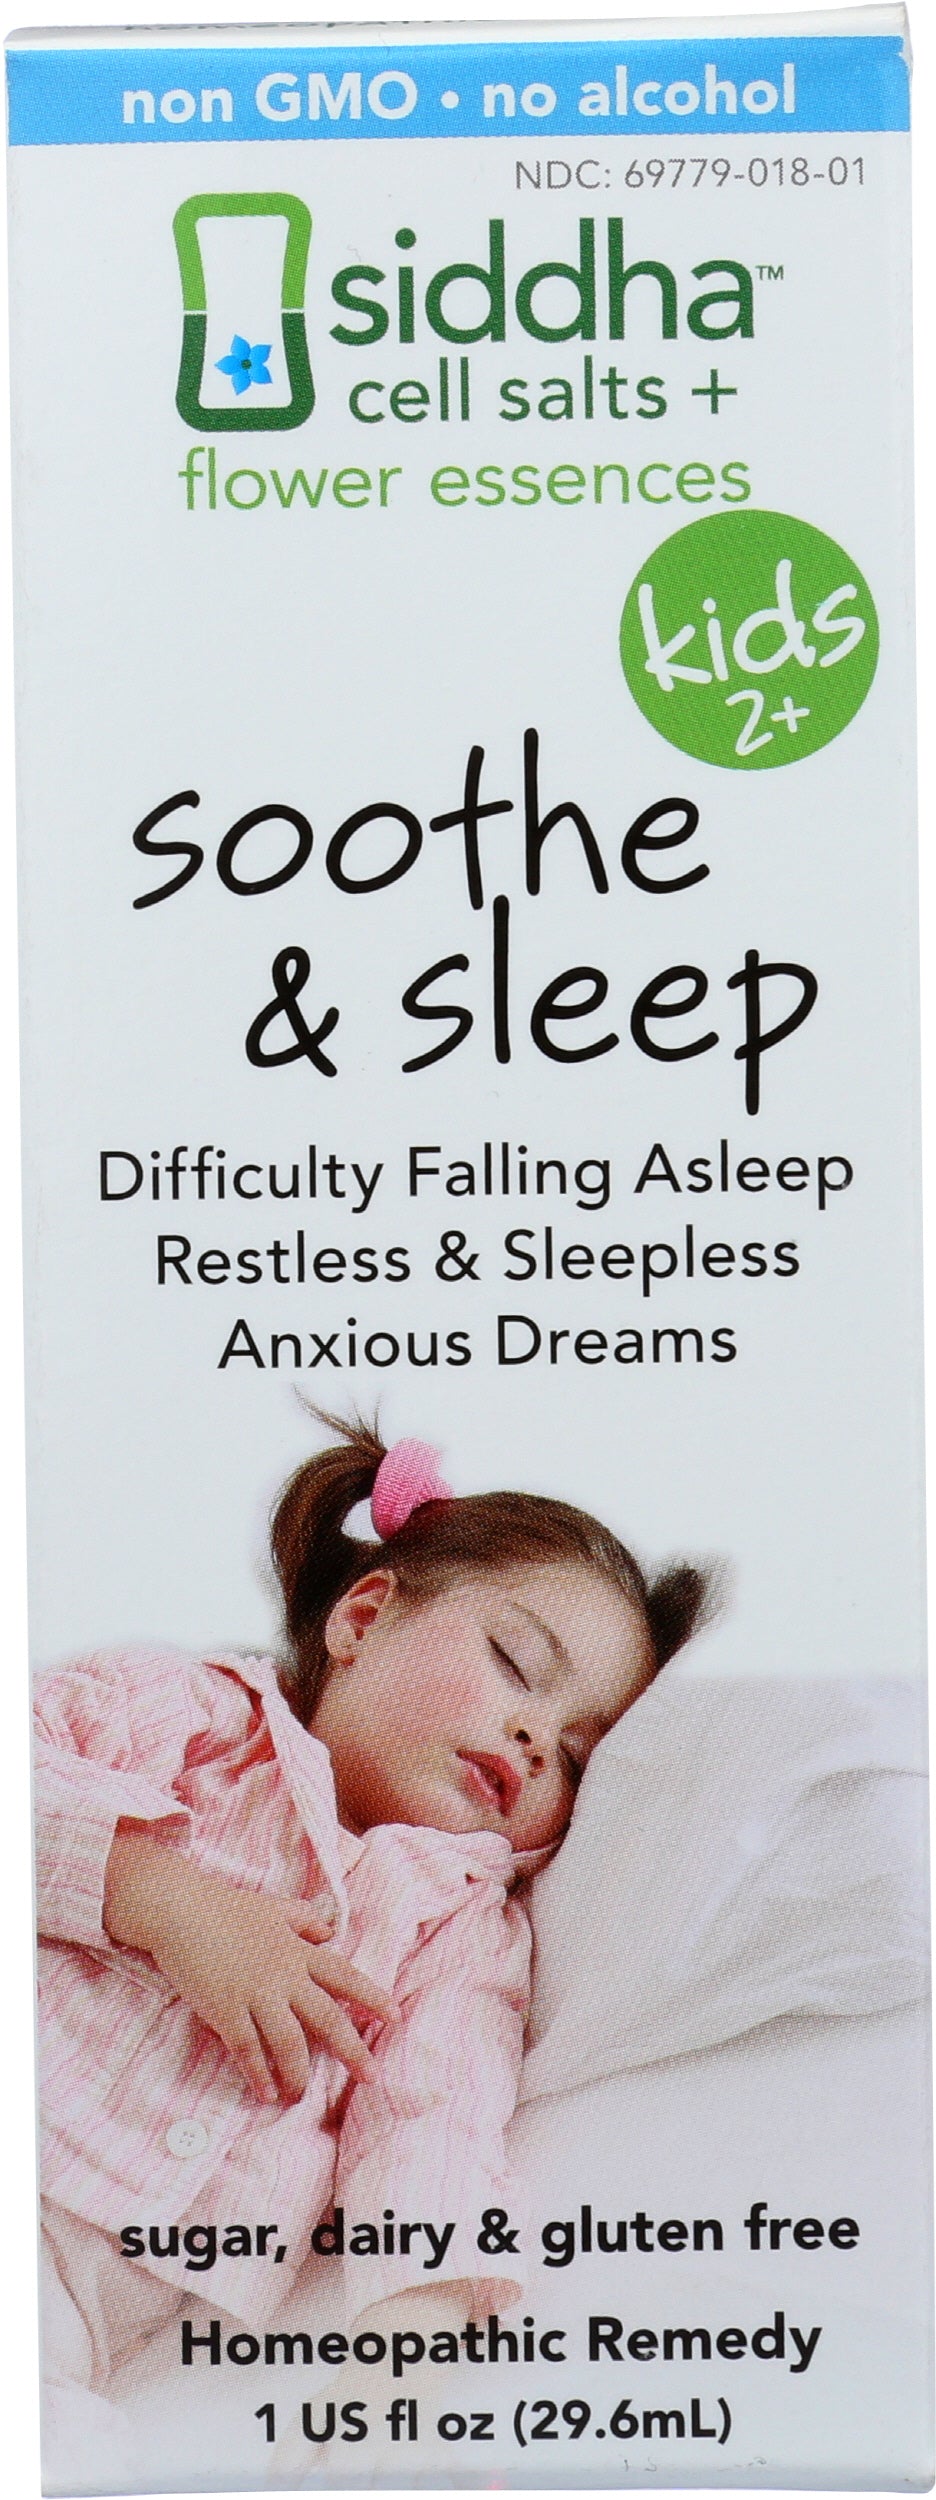 Siddha Remedies Soothe & Sleep Kids 2+ 1 Fl. Oz. Front